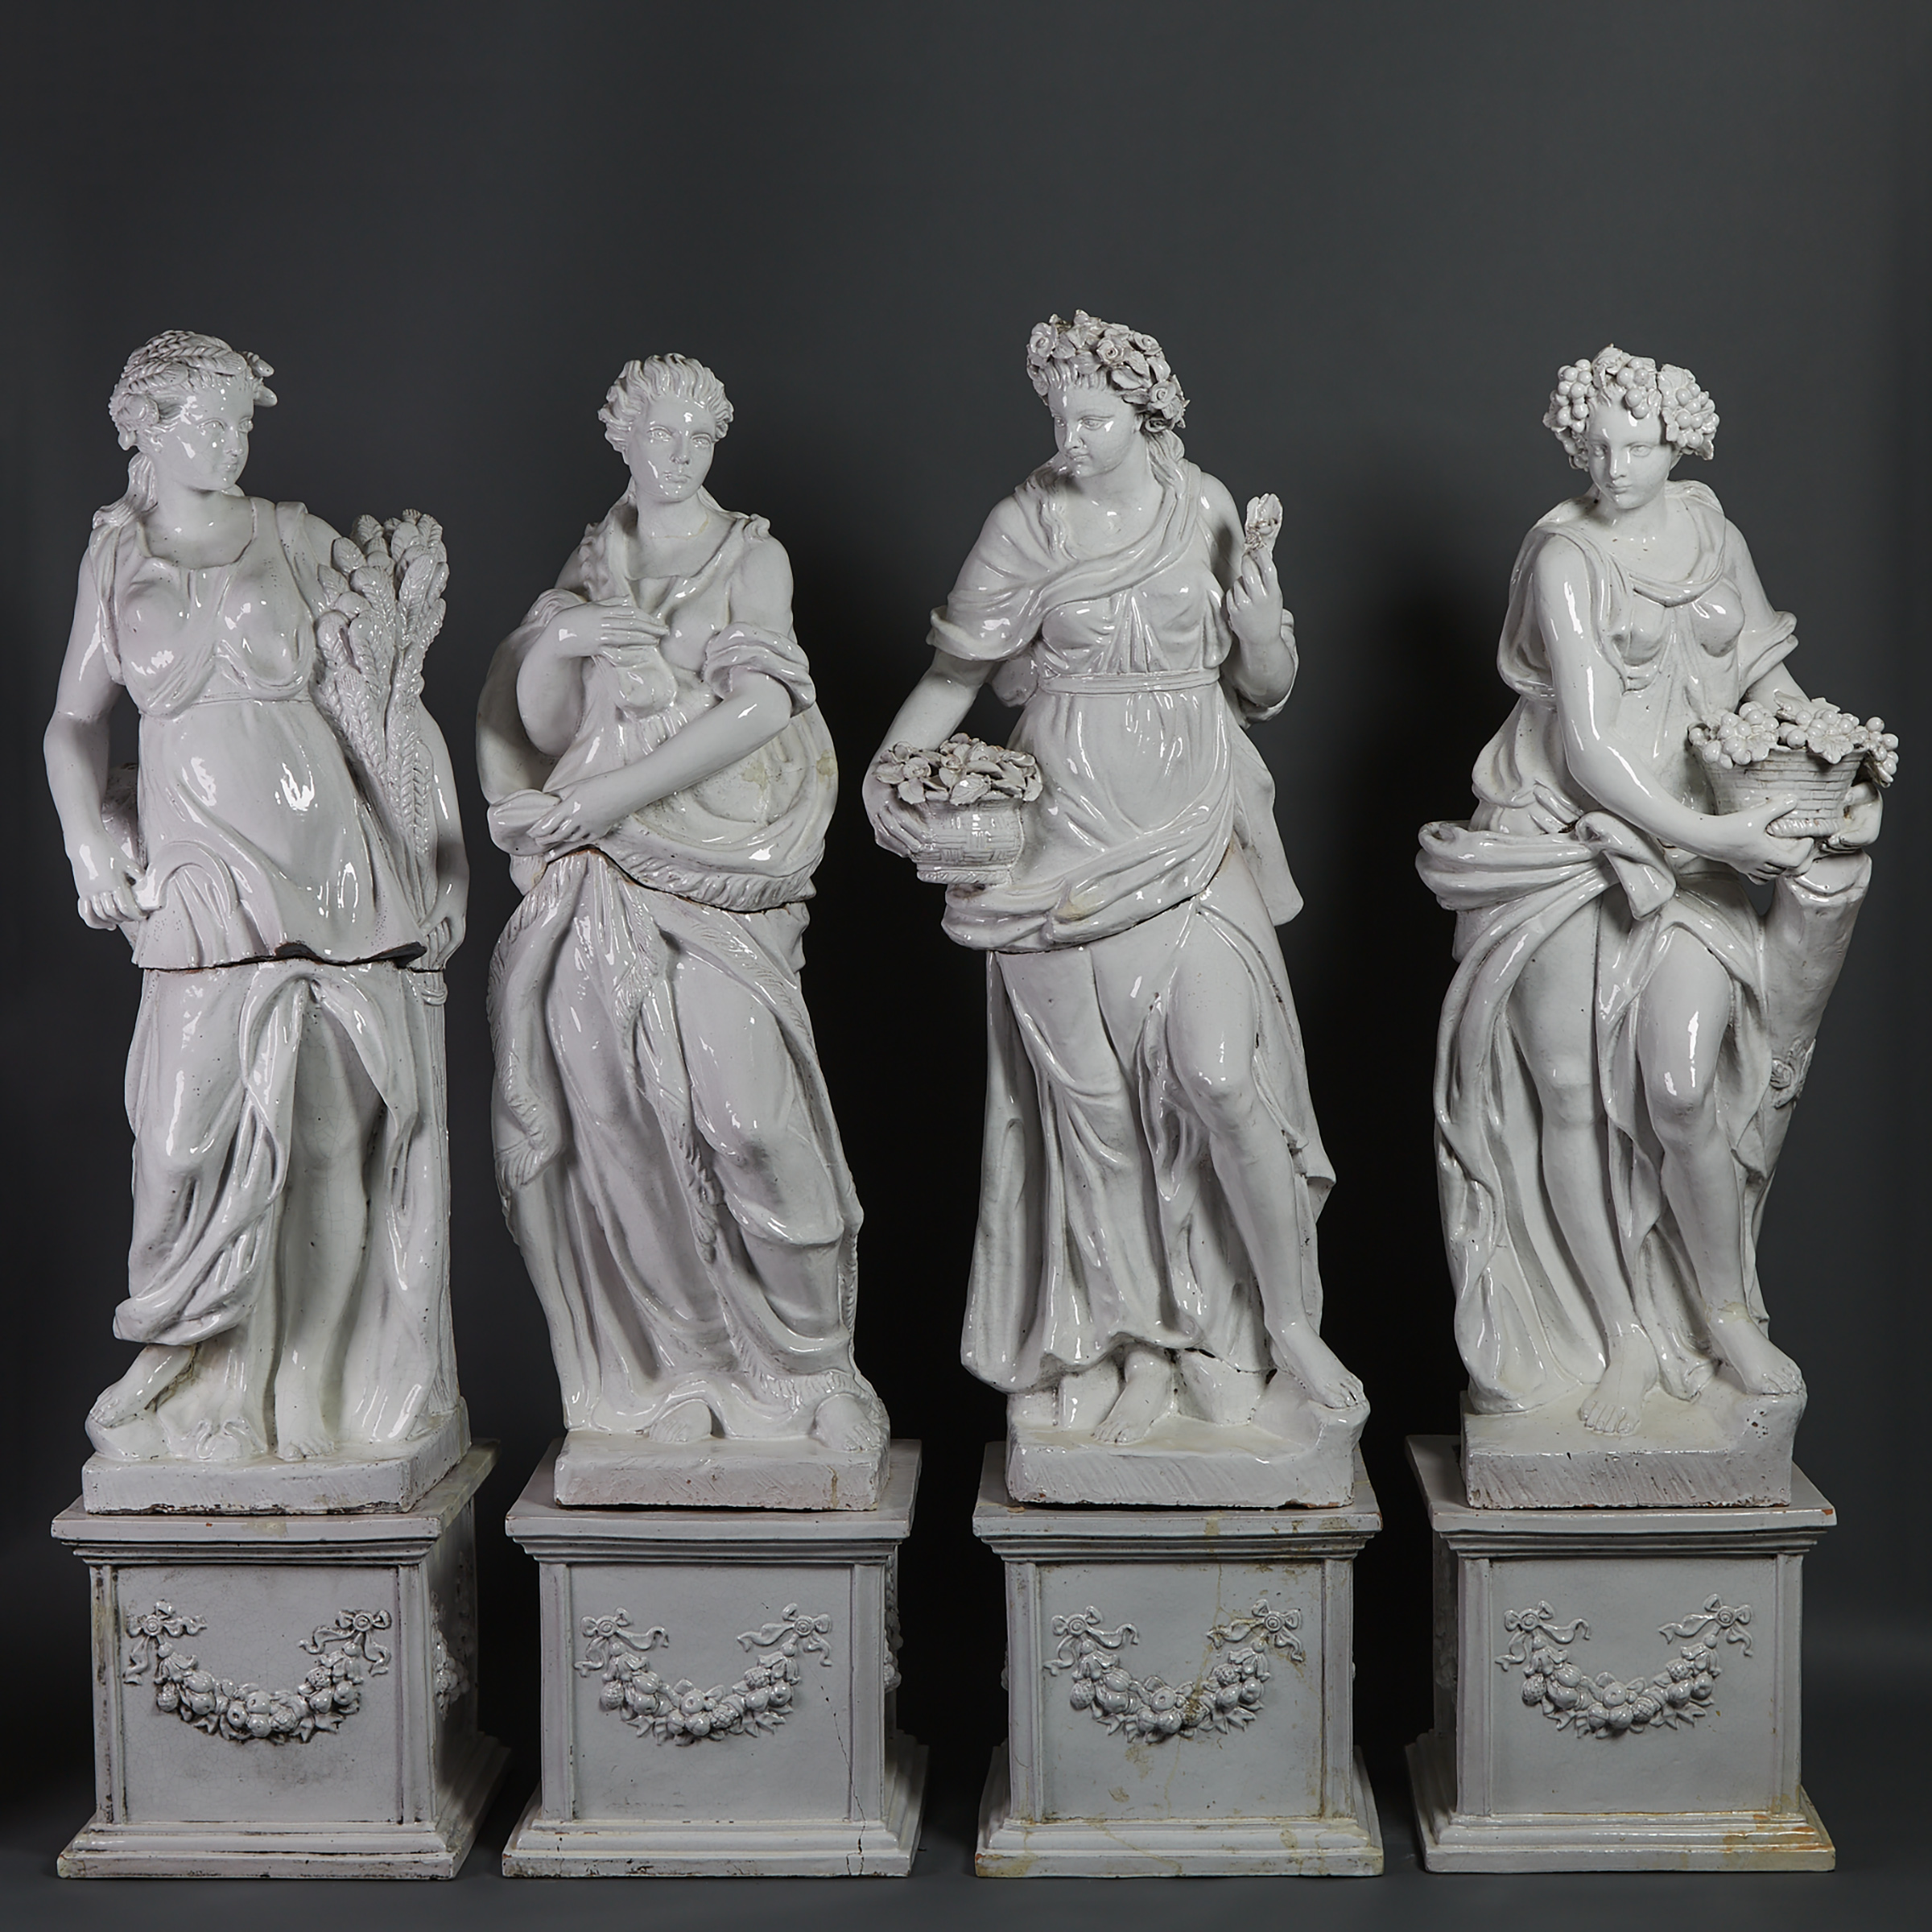 Set of Italian Glazed Terracotta Garden Statuary Figures of the Four Seasons, 20th century